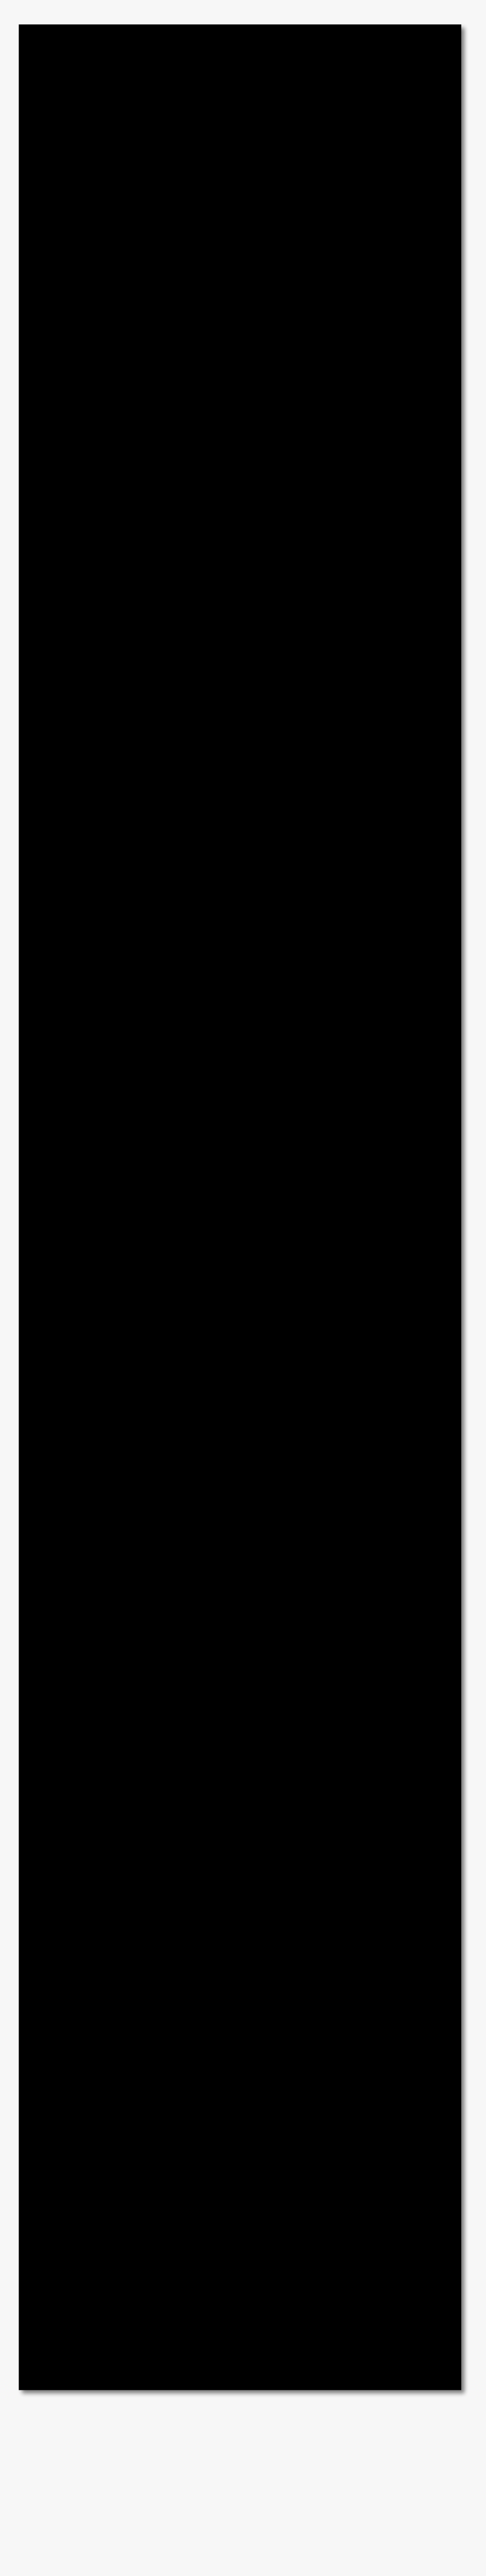 S8 Edge Wallpaper Black, HD Png Download, Free Download